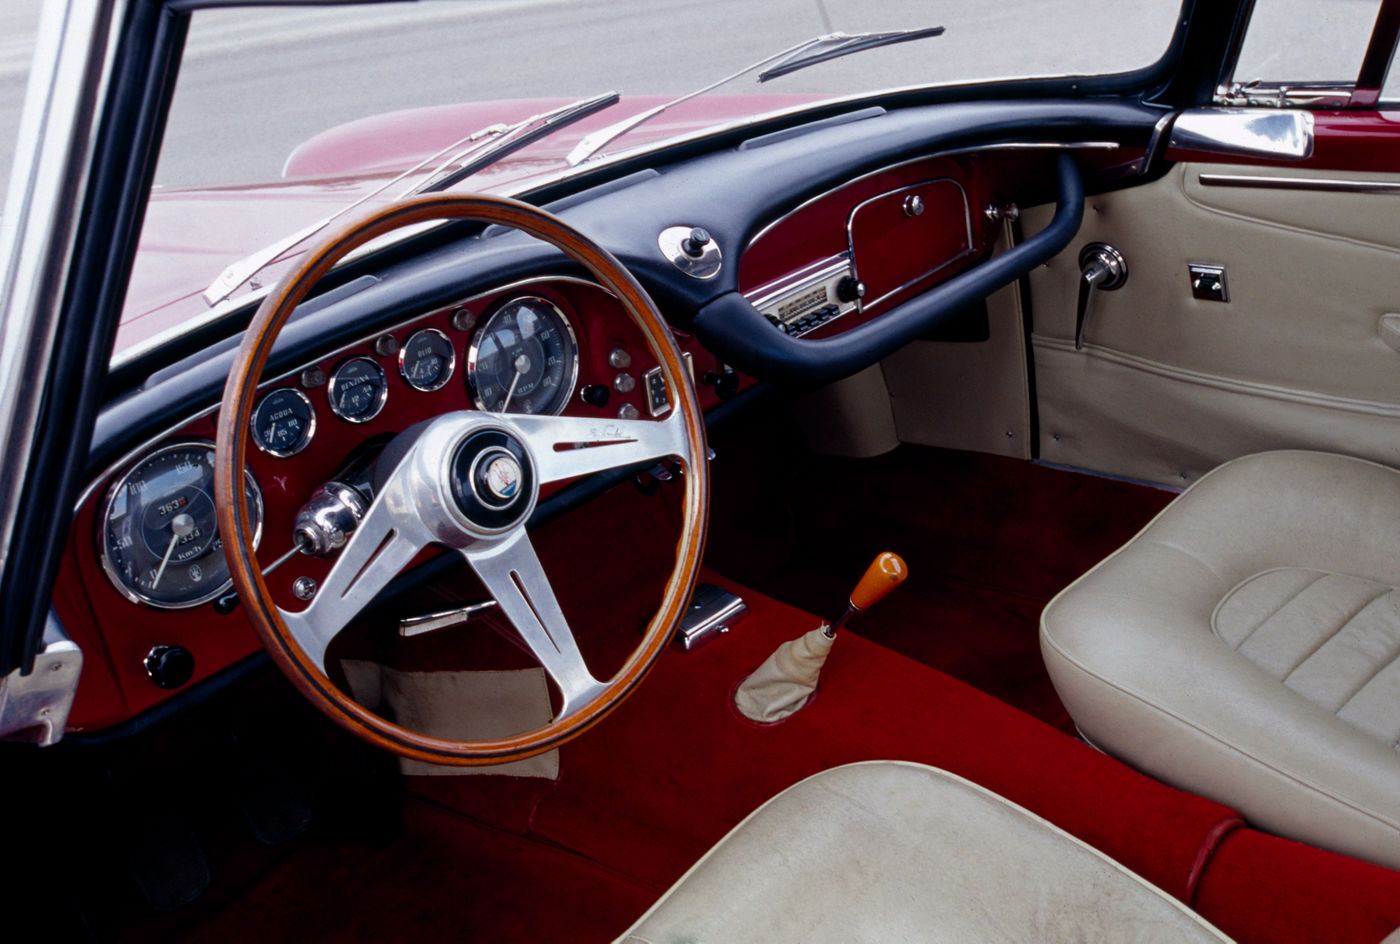 1957 Maserati 3500GT - interior of the classic car model in red